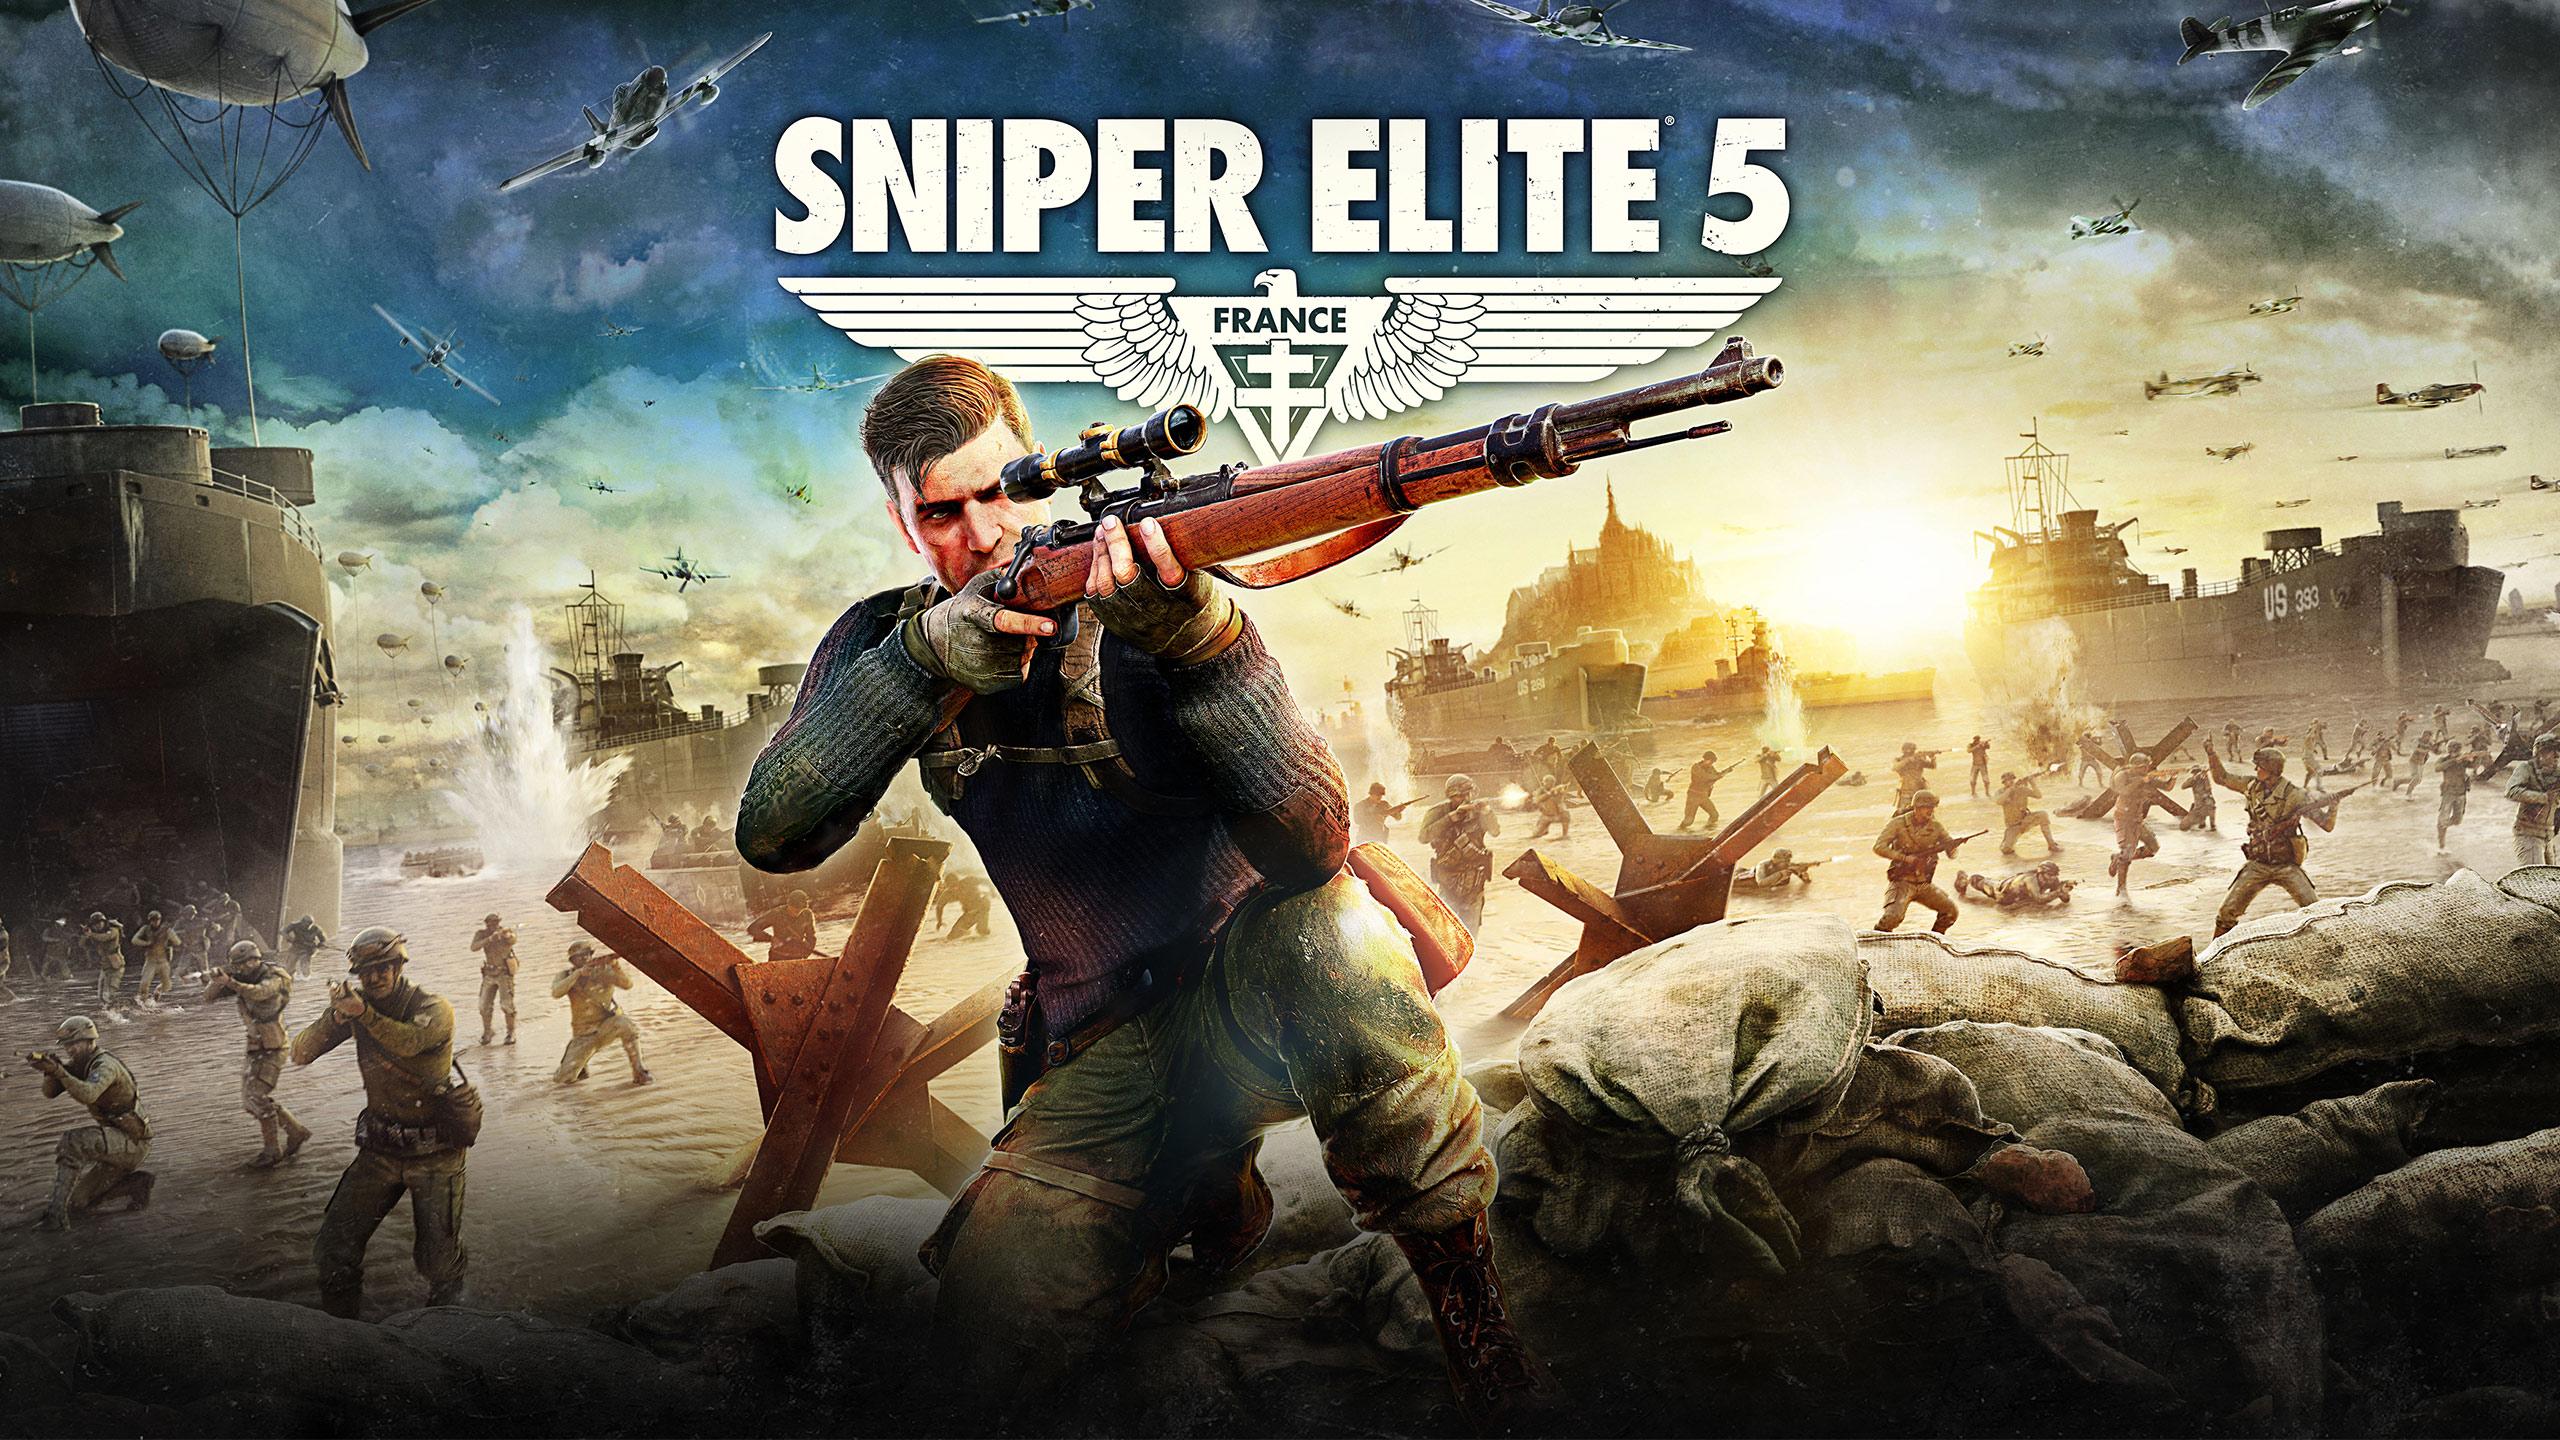 Player's favorite games: Sniper Elite 5